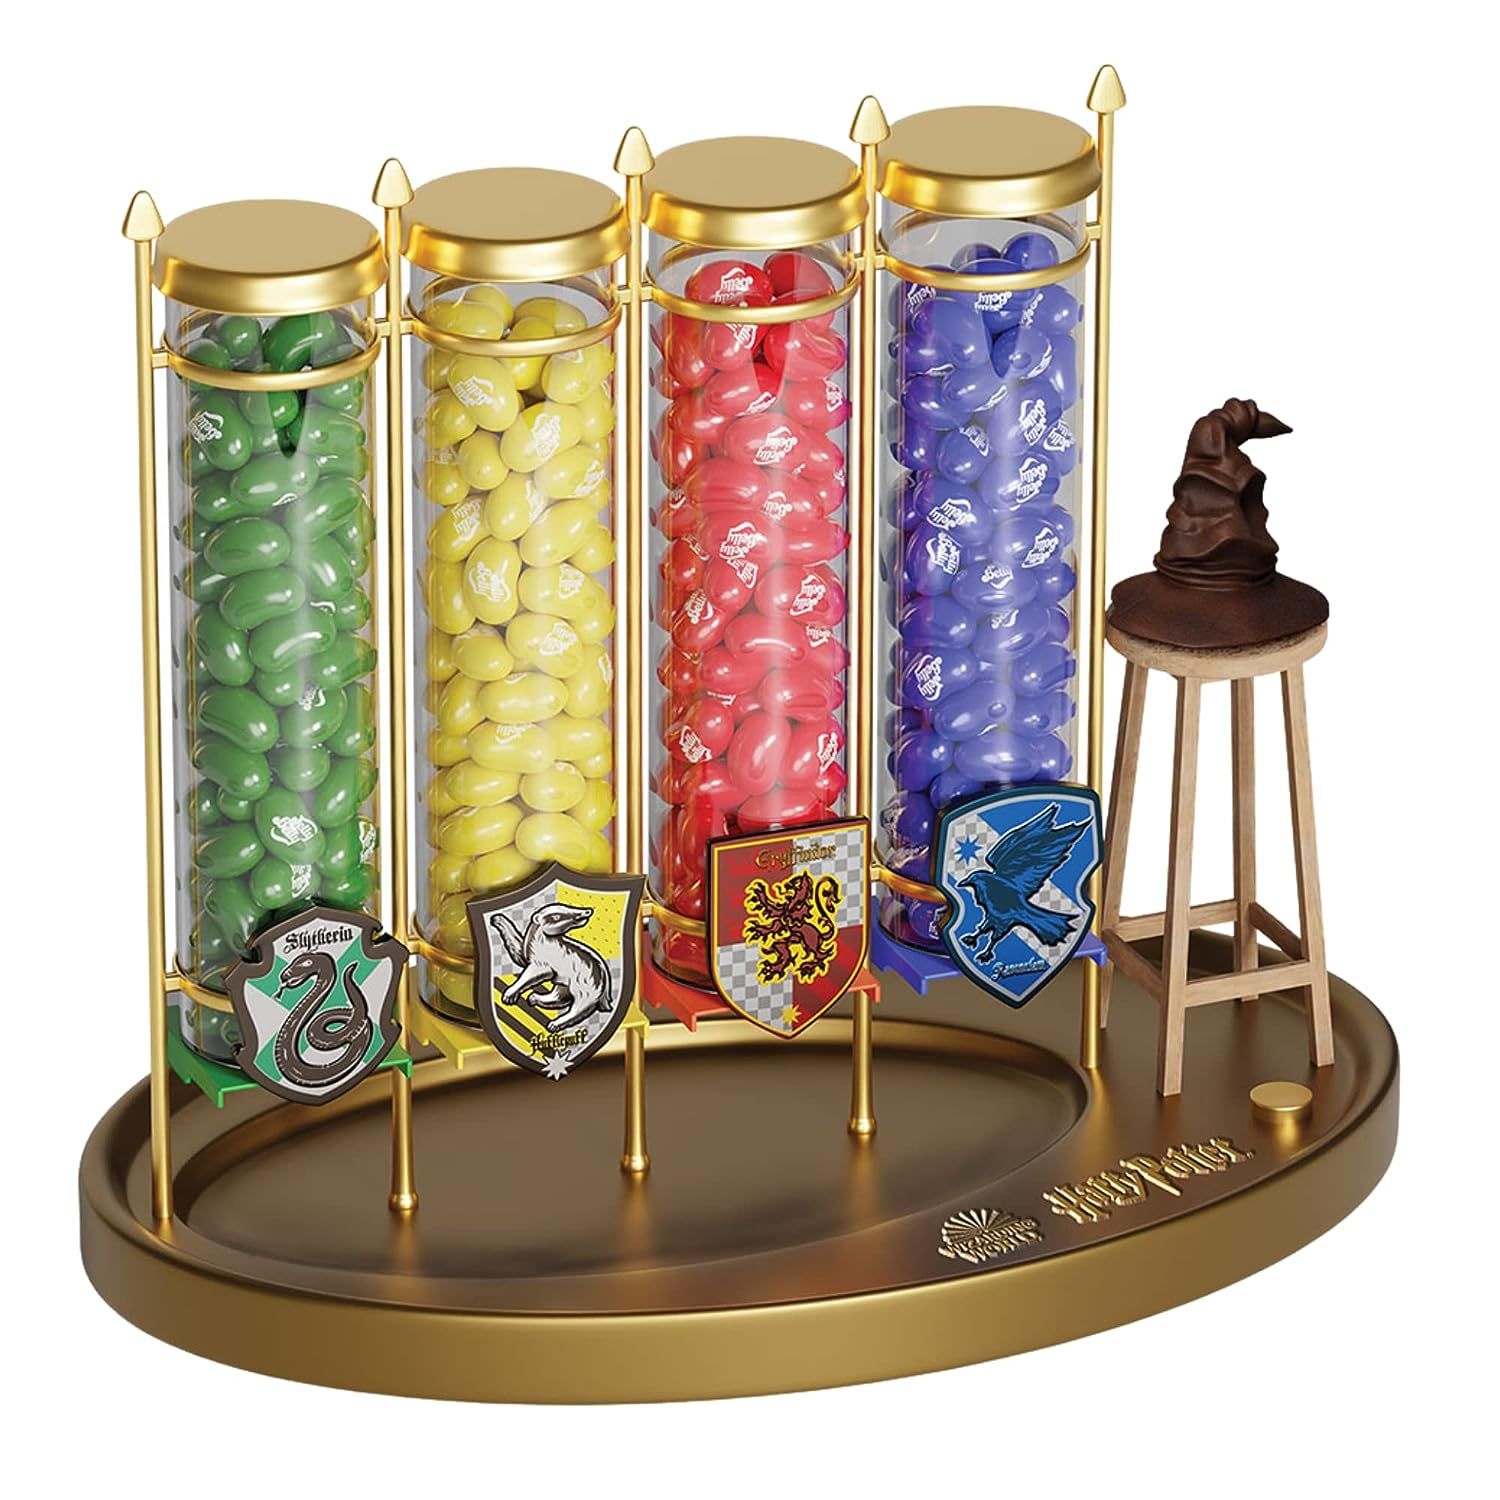 Harry Potter Candy Dispenser